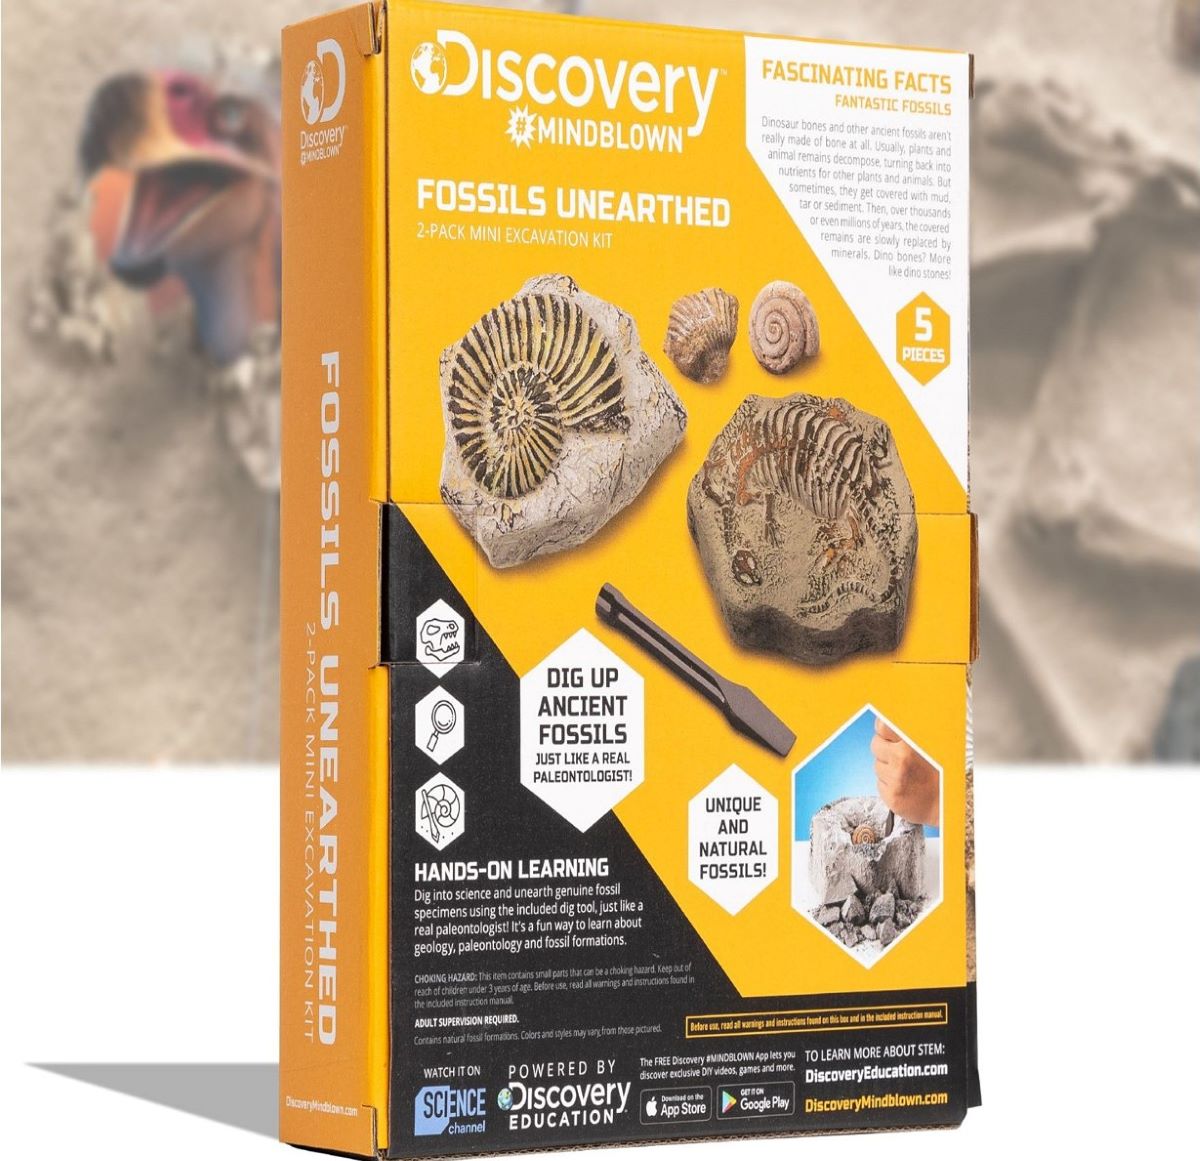 Discovery #MINDBLOWN Toy Excavation Mini Fossil Kit